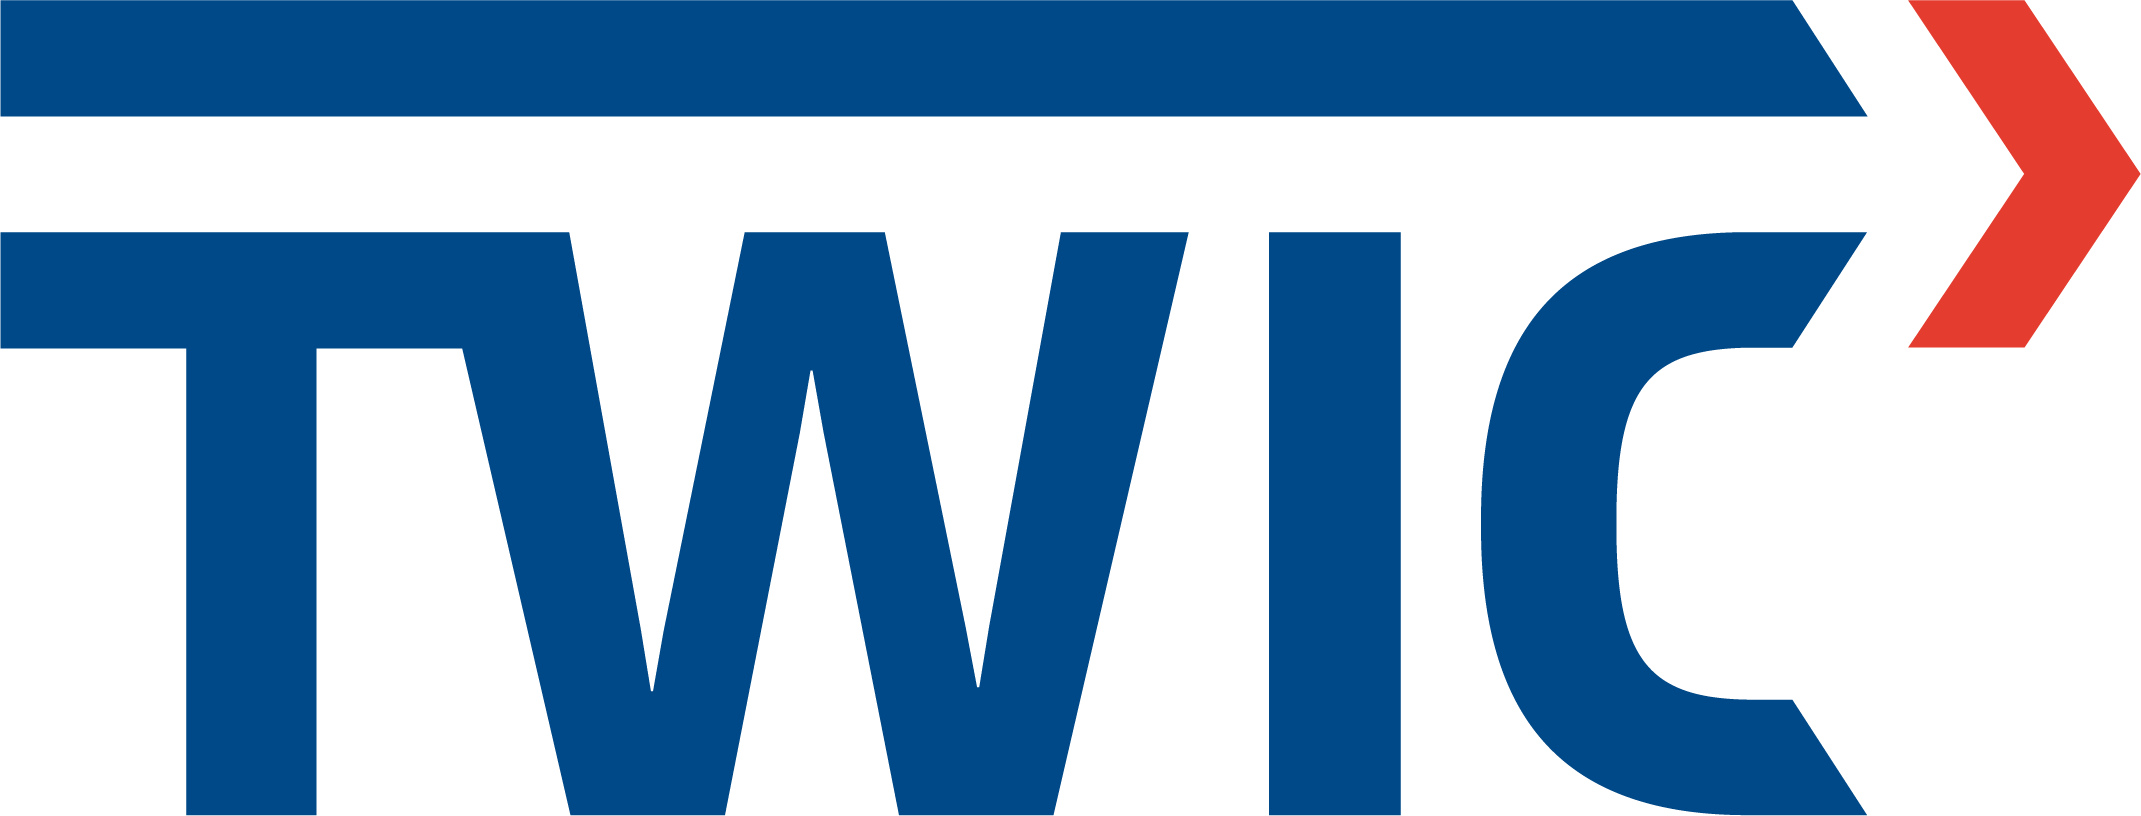 TWIC Logo